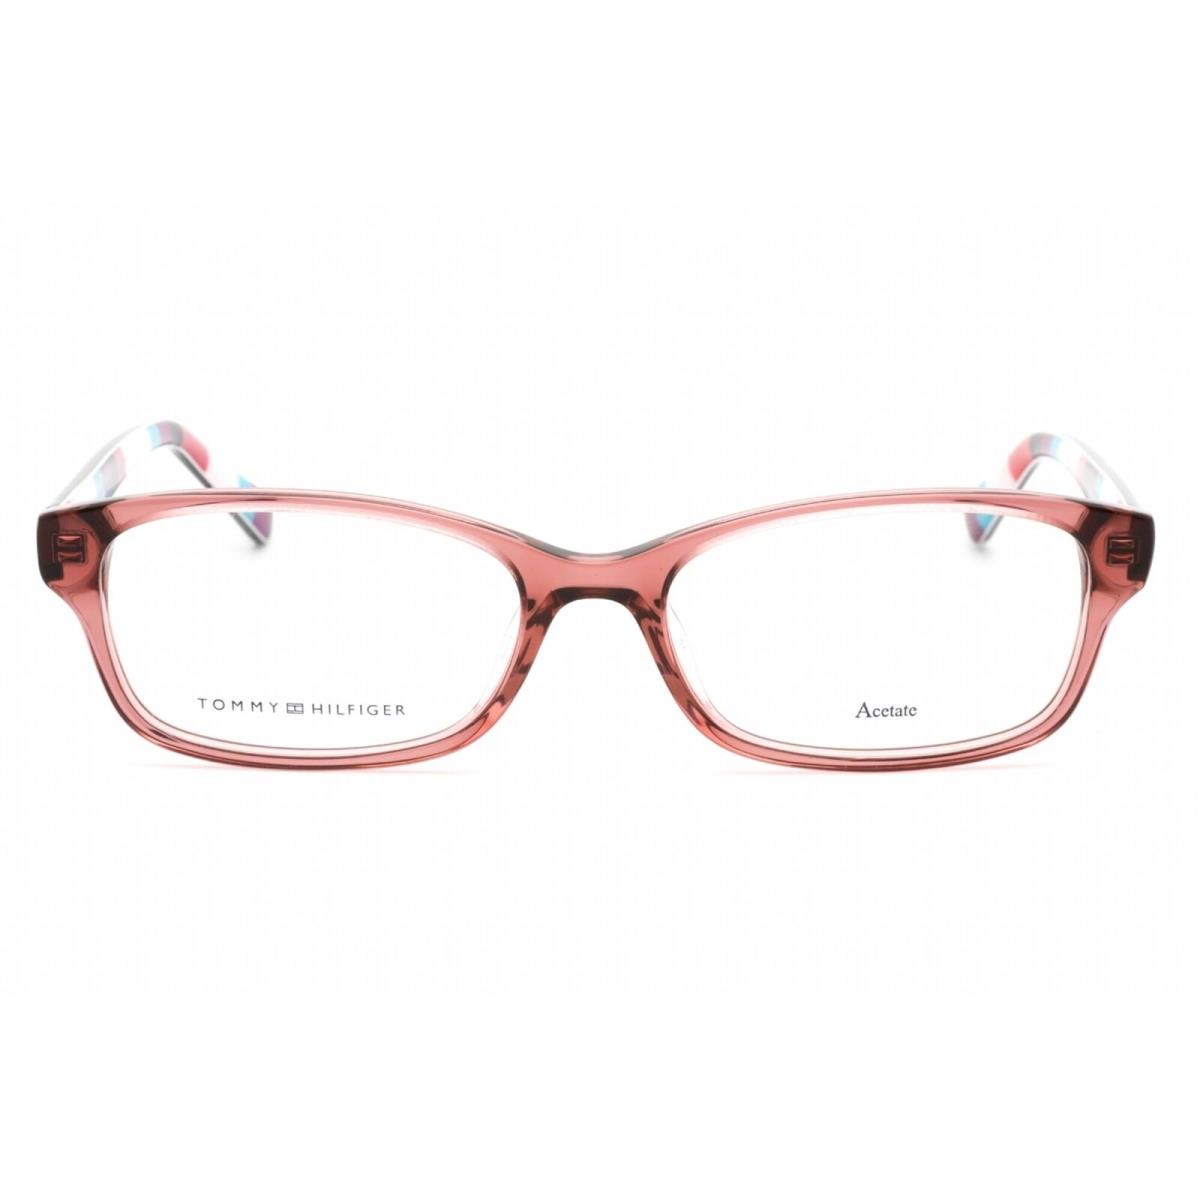 Tommy Hilfiger Women`s Eyeglasses Pink Plastic Full Rim Frame TH 1685 035J 00